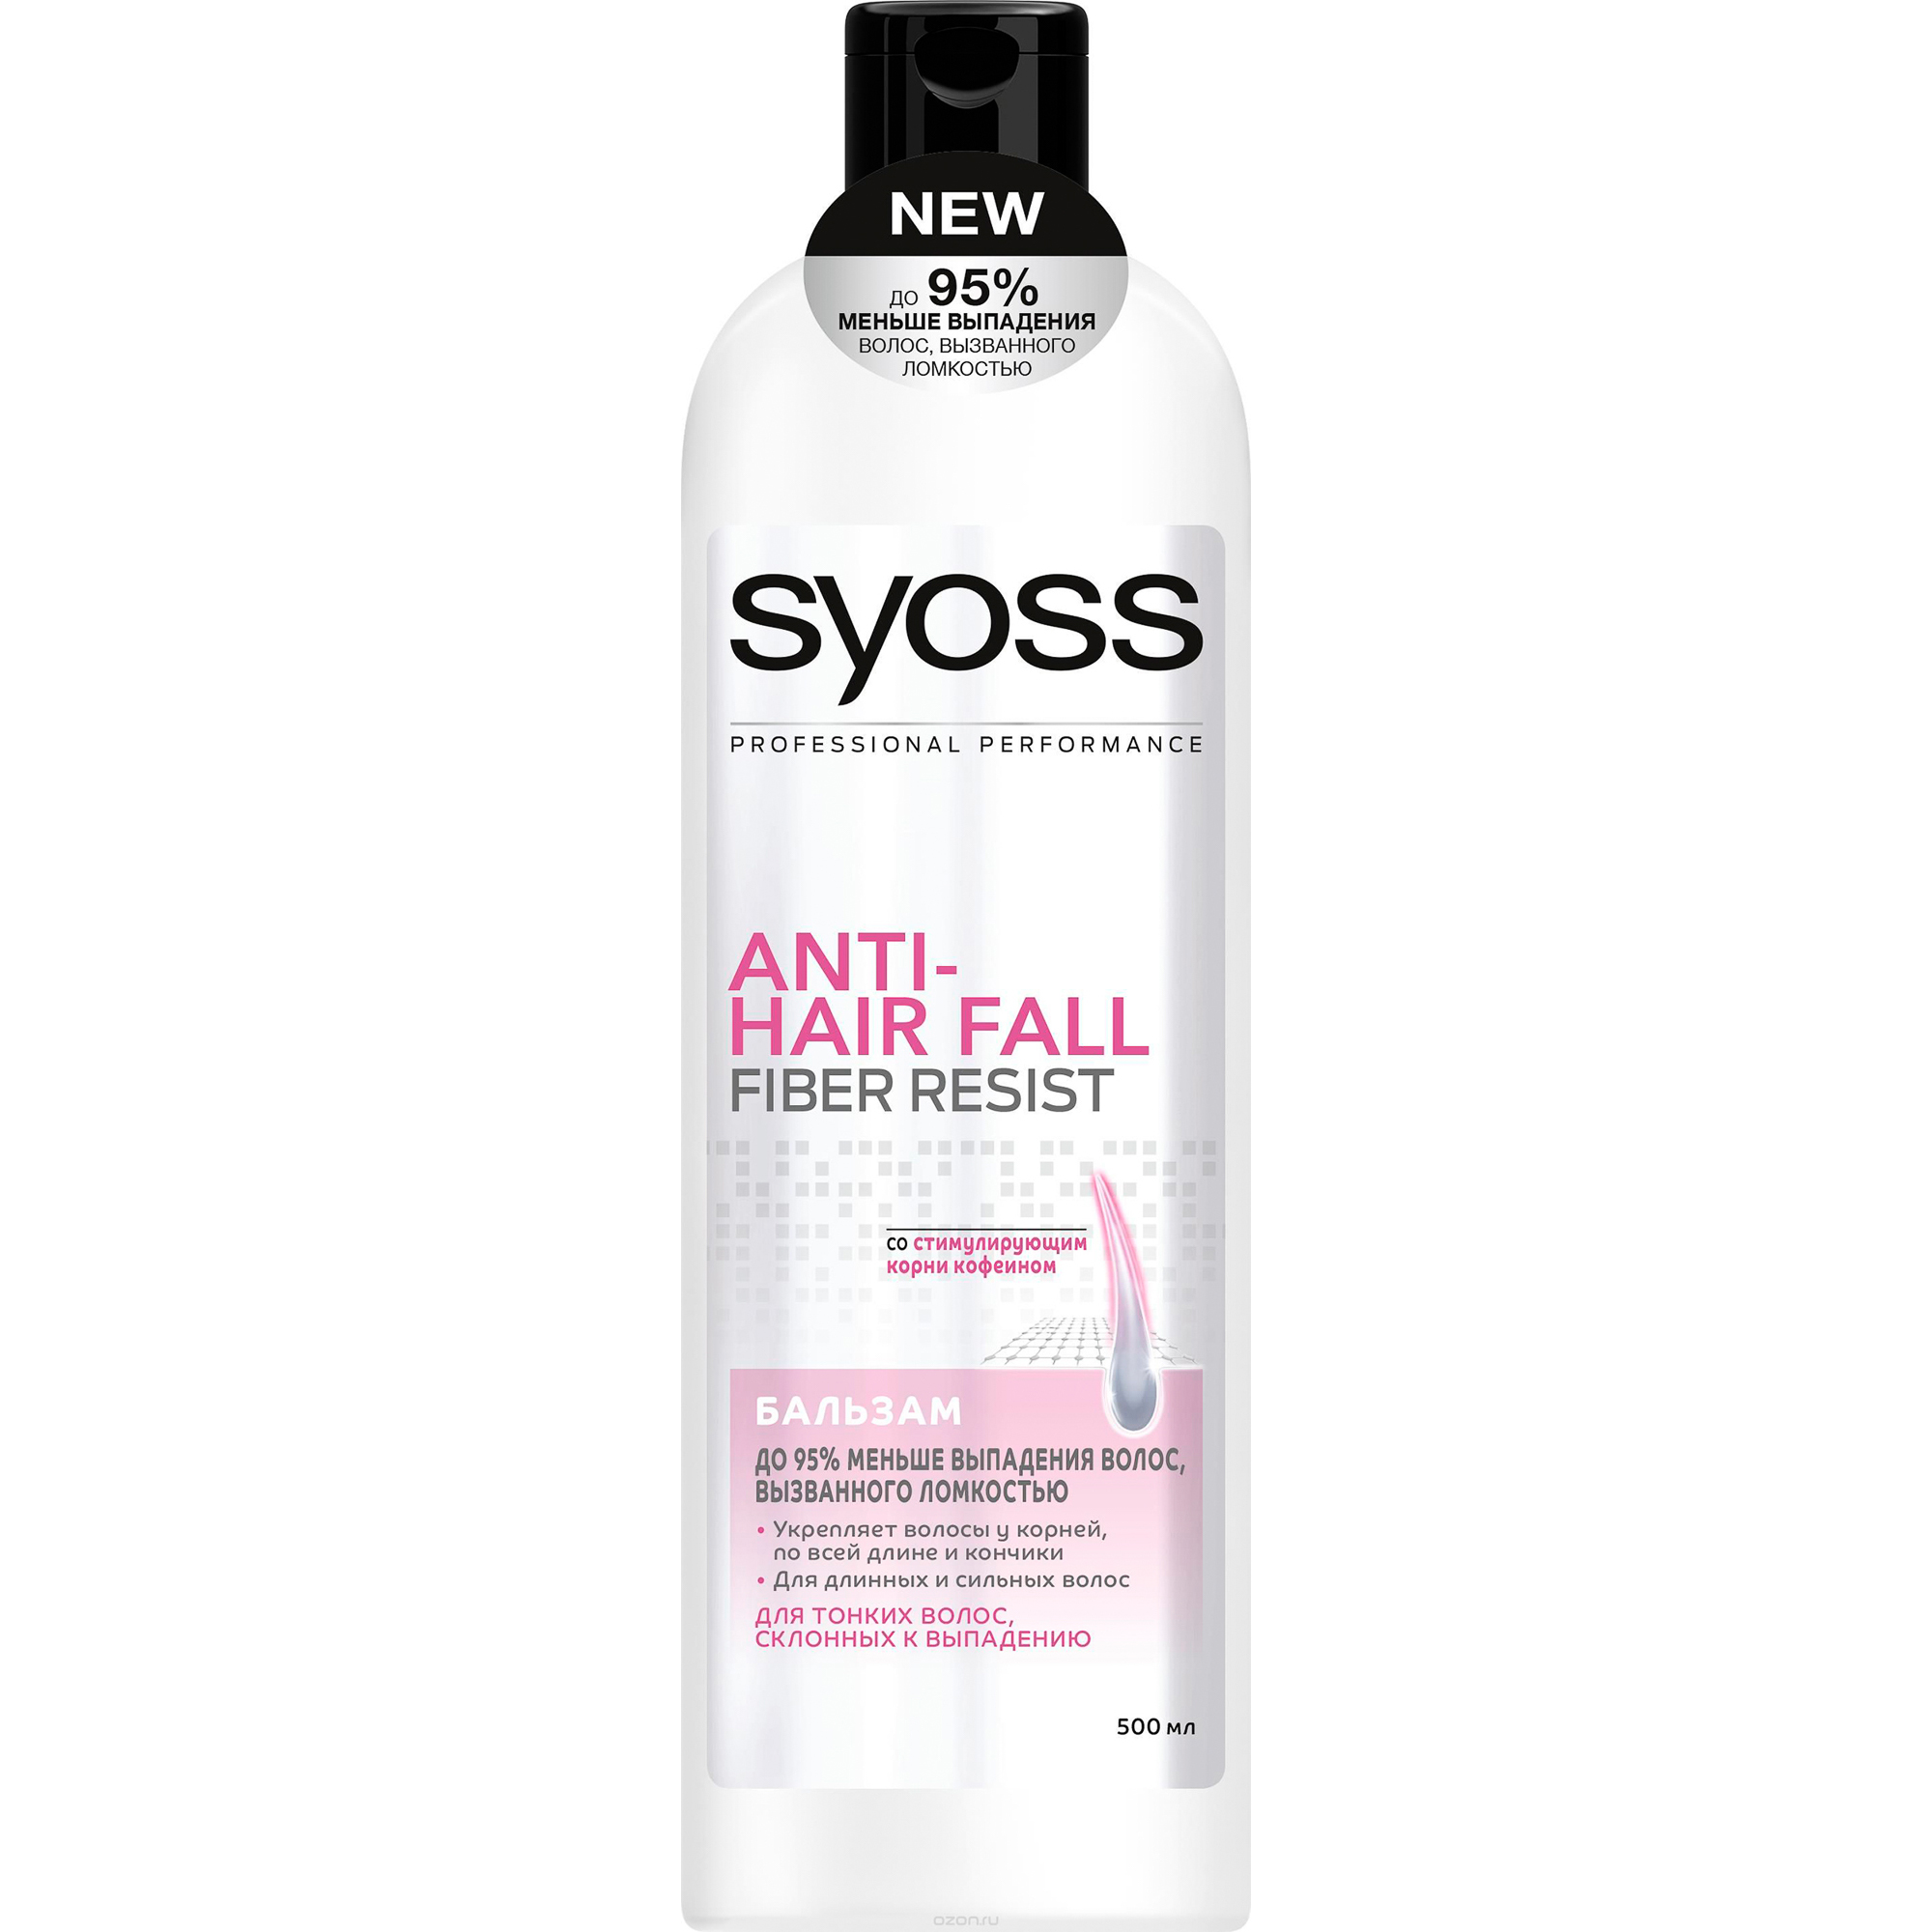 цена Бальзам SYOSS Anti-Hair Fall Fiber Resist 95 для склонных к выпадению волос 500 мл